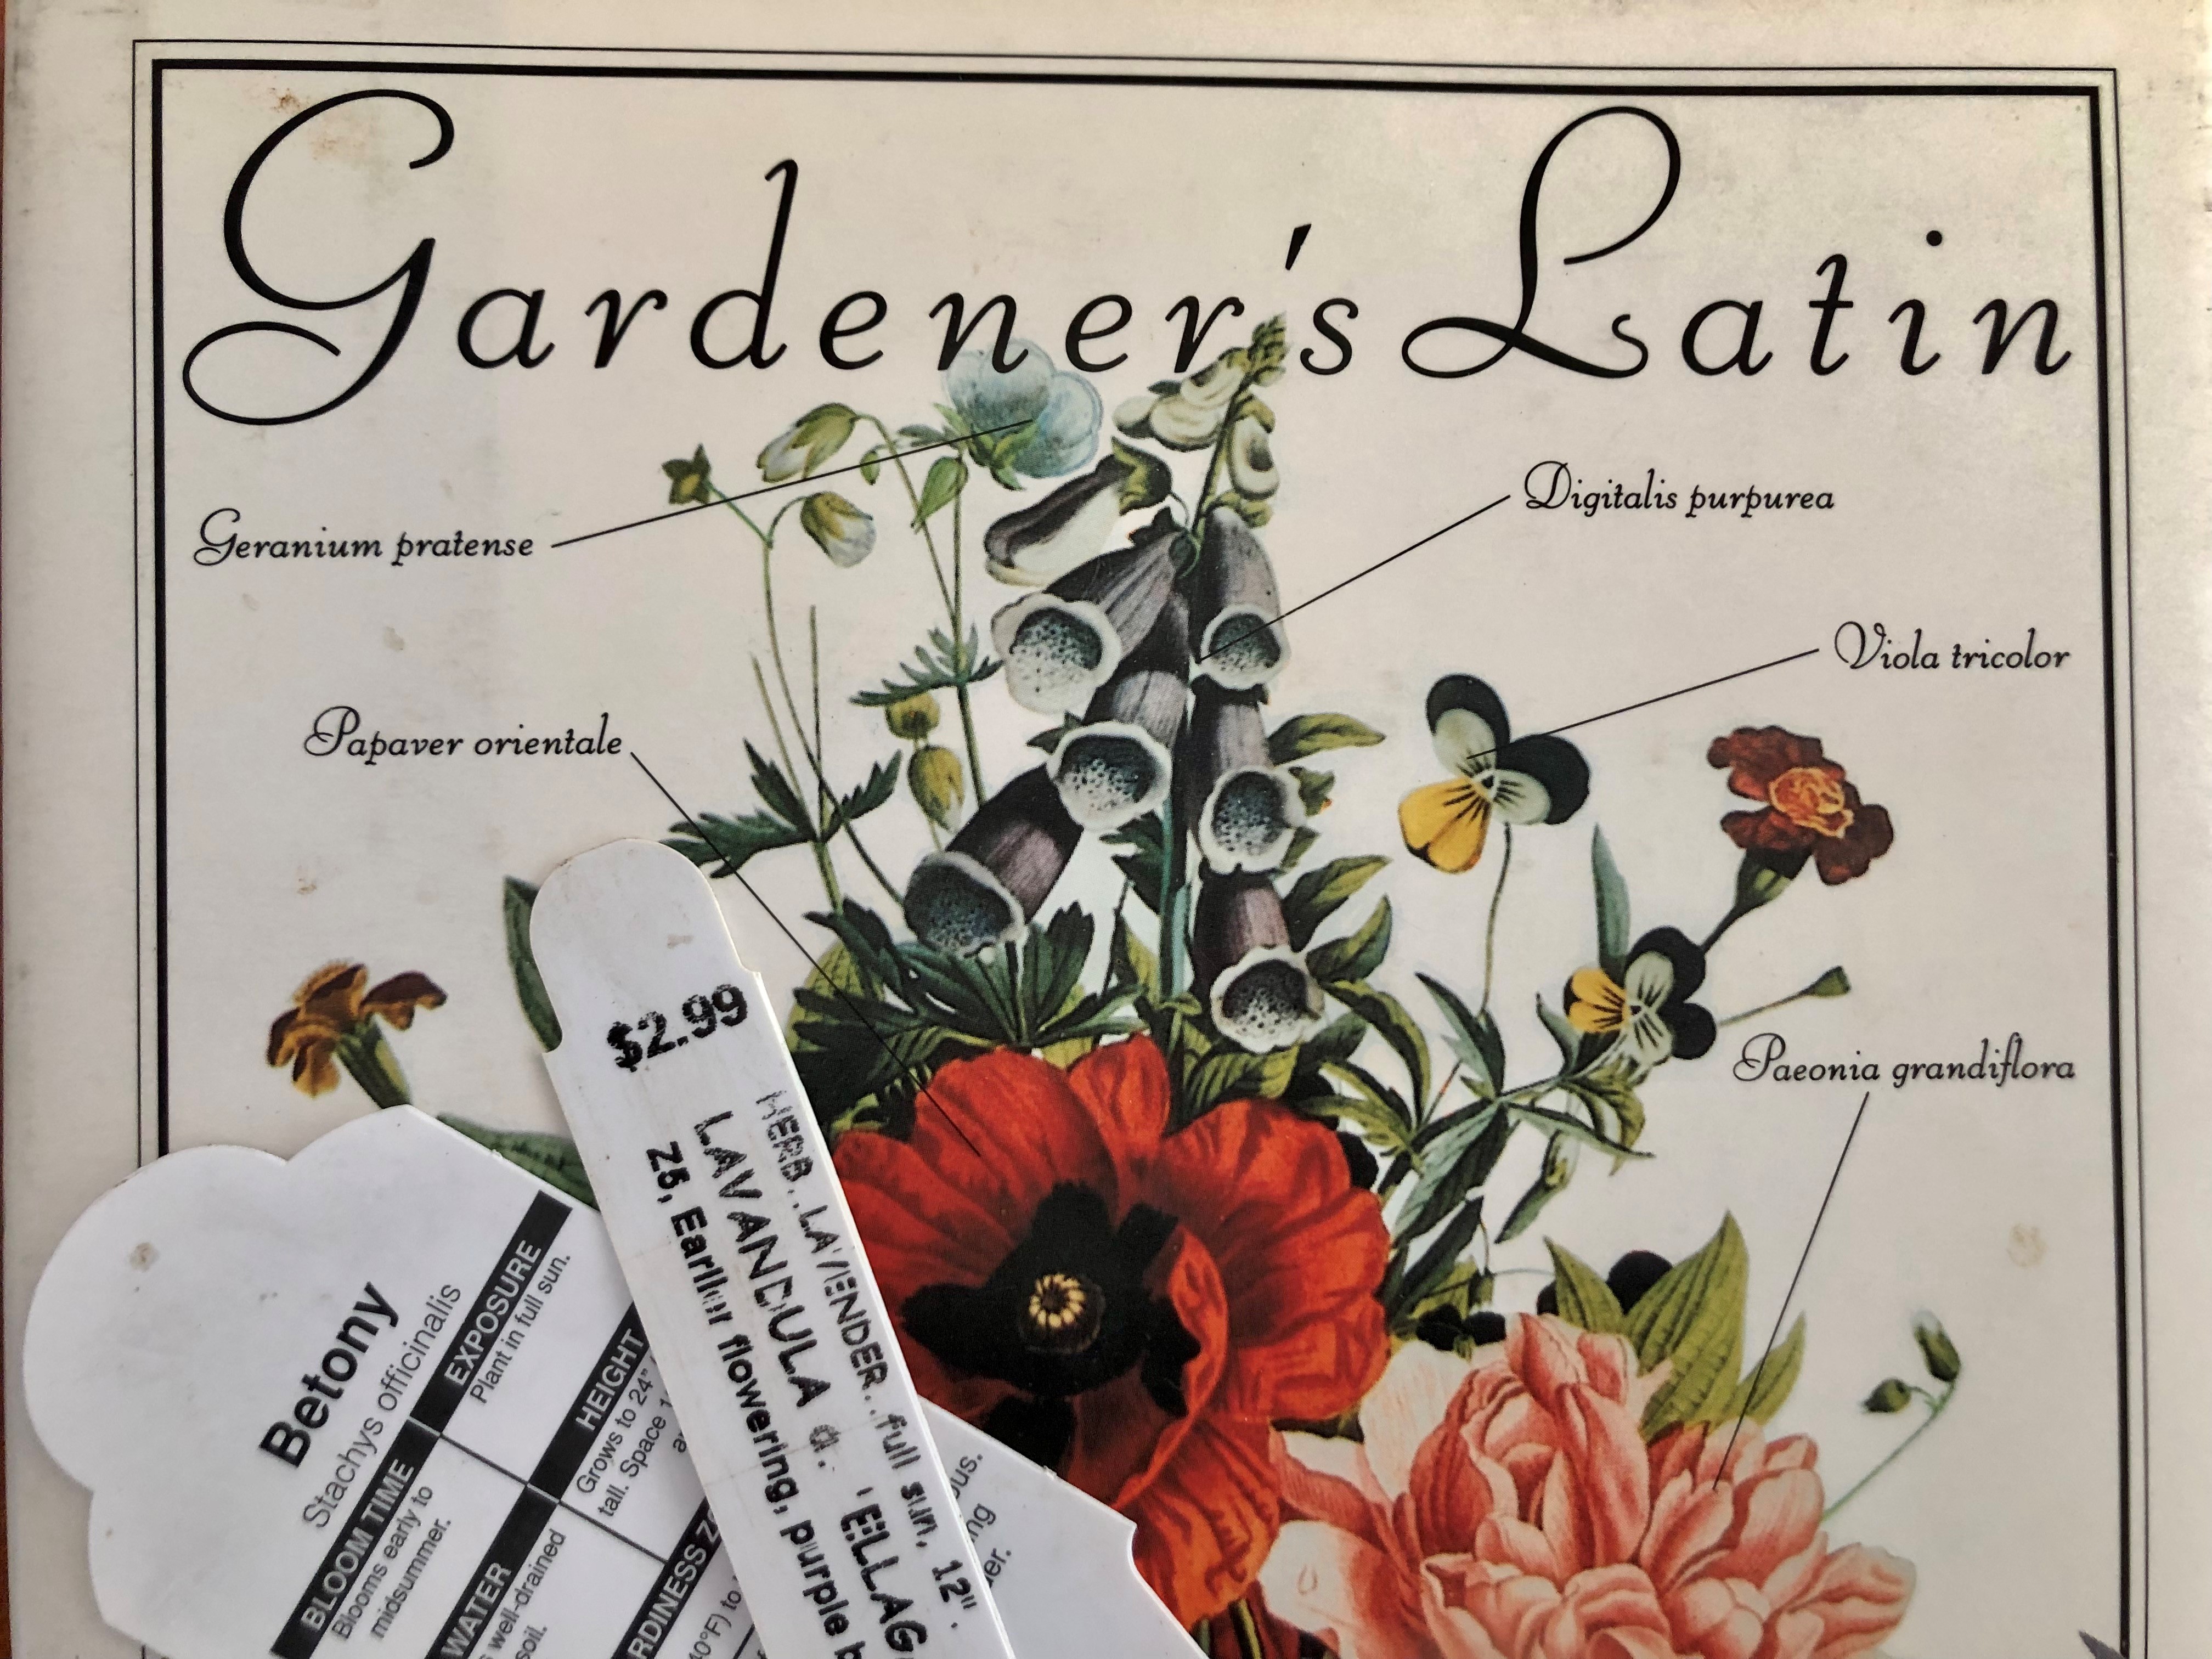 WEBINAR: Botanical Latin